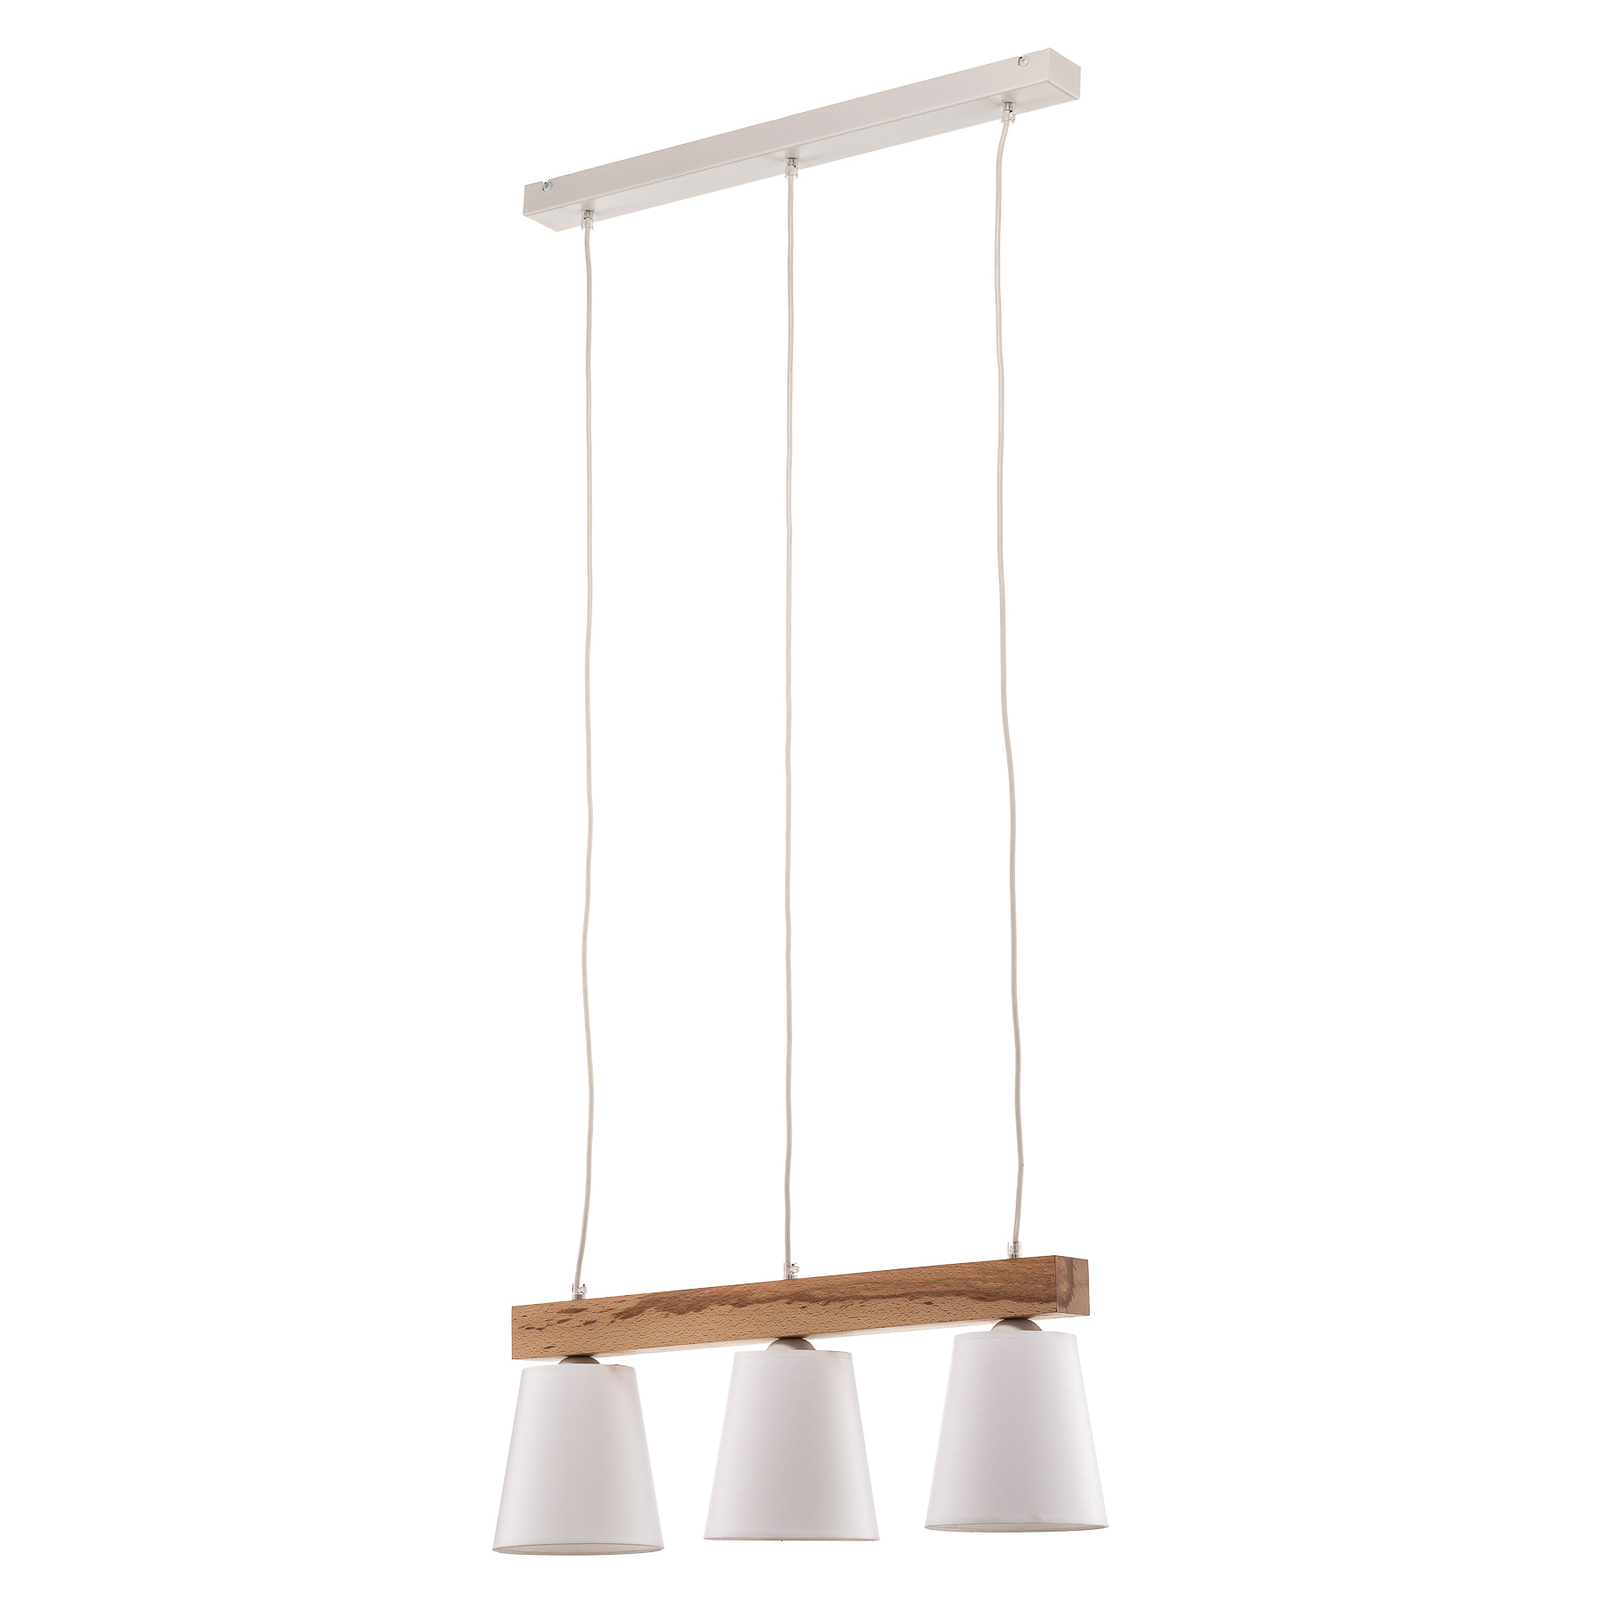 Hanglamp Aldonn met stoffen kap, 3-lamps